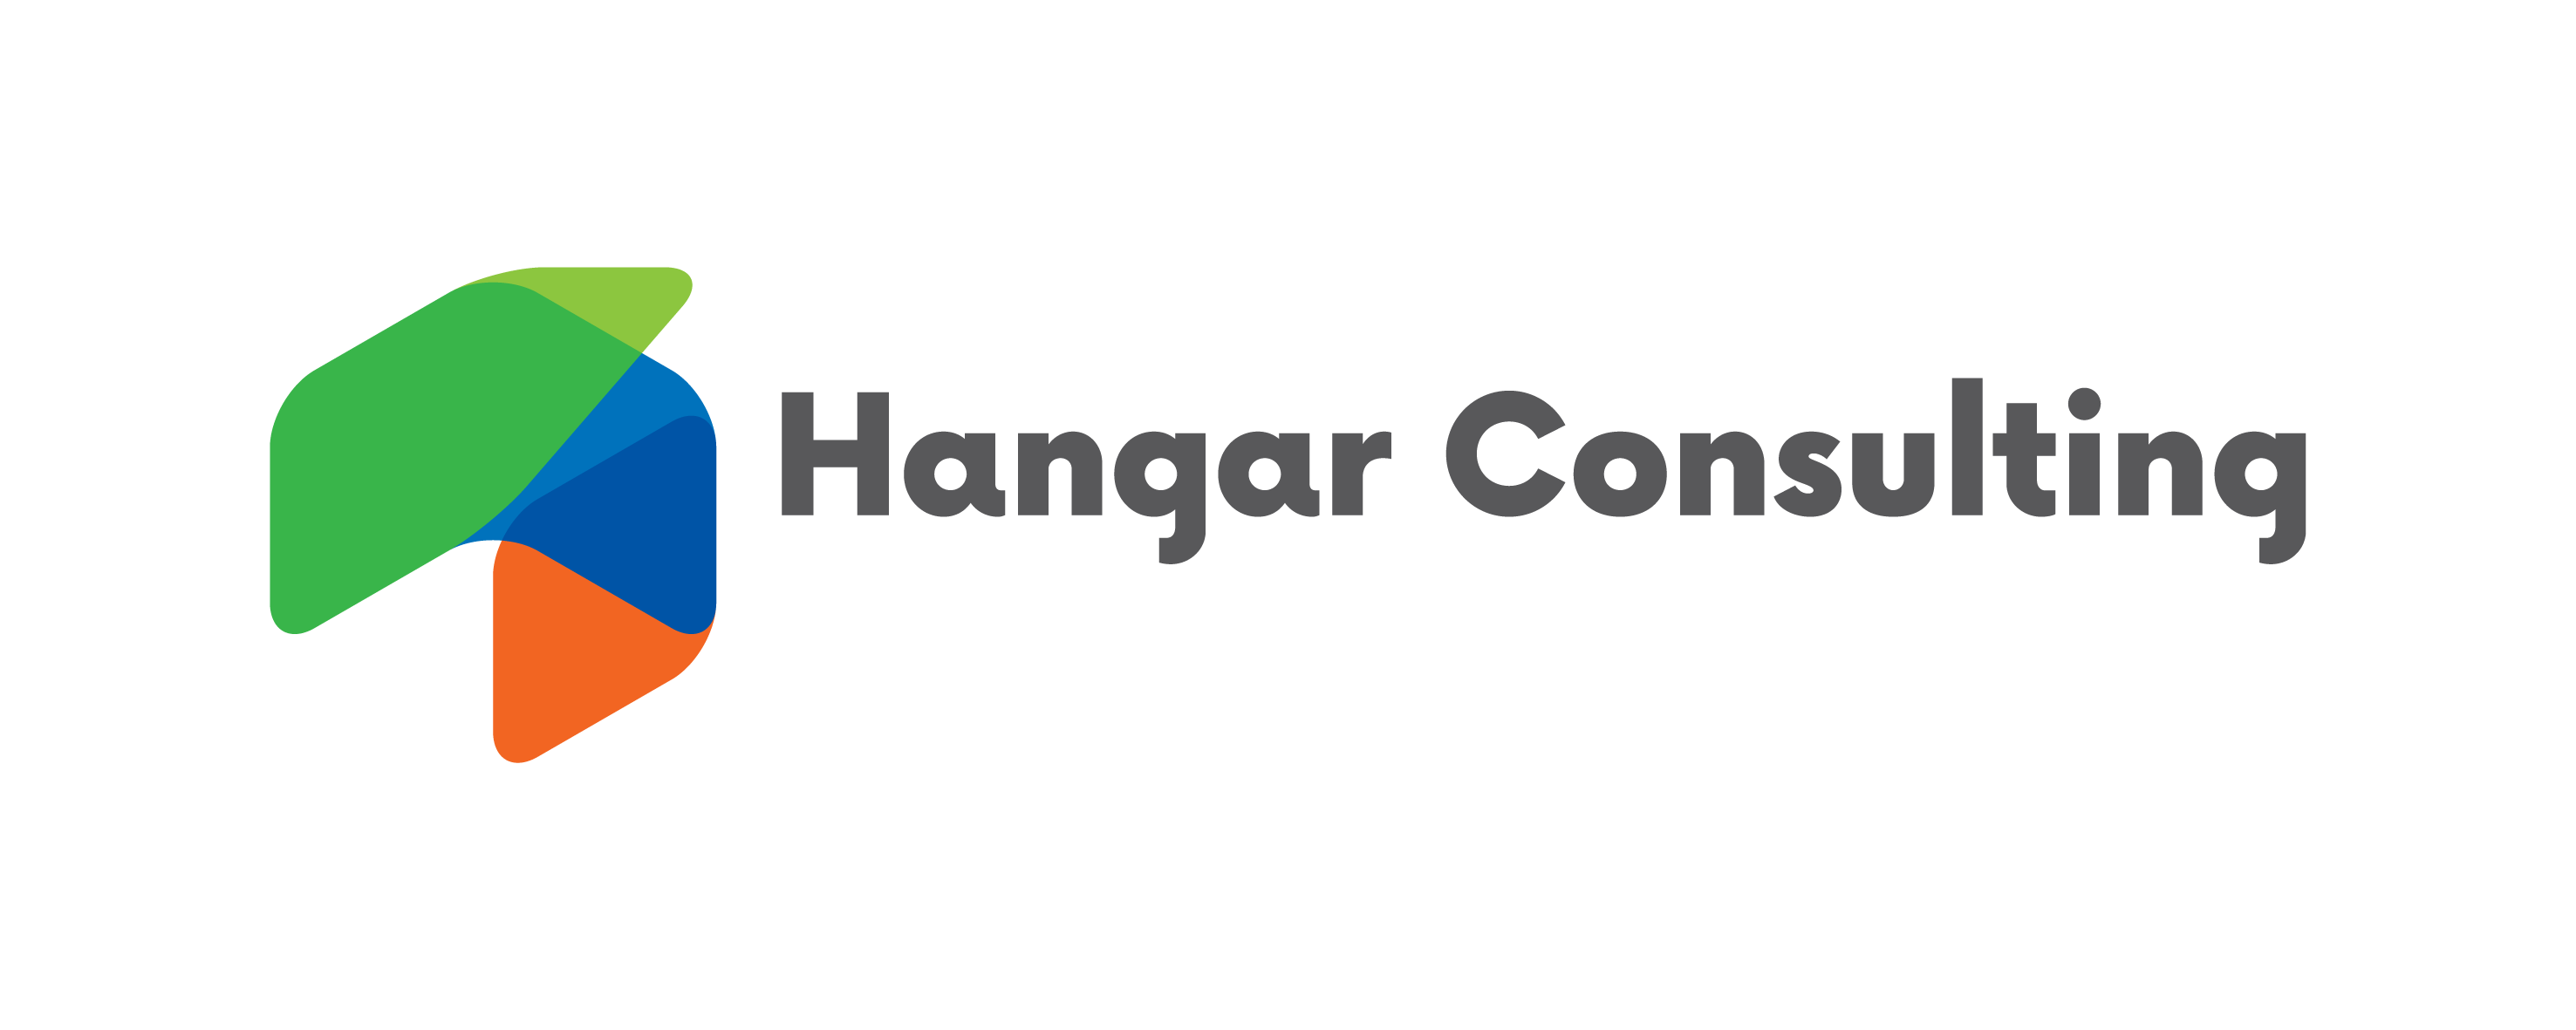 Hangar Consulting